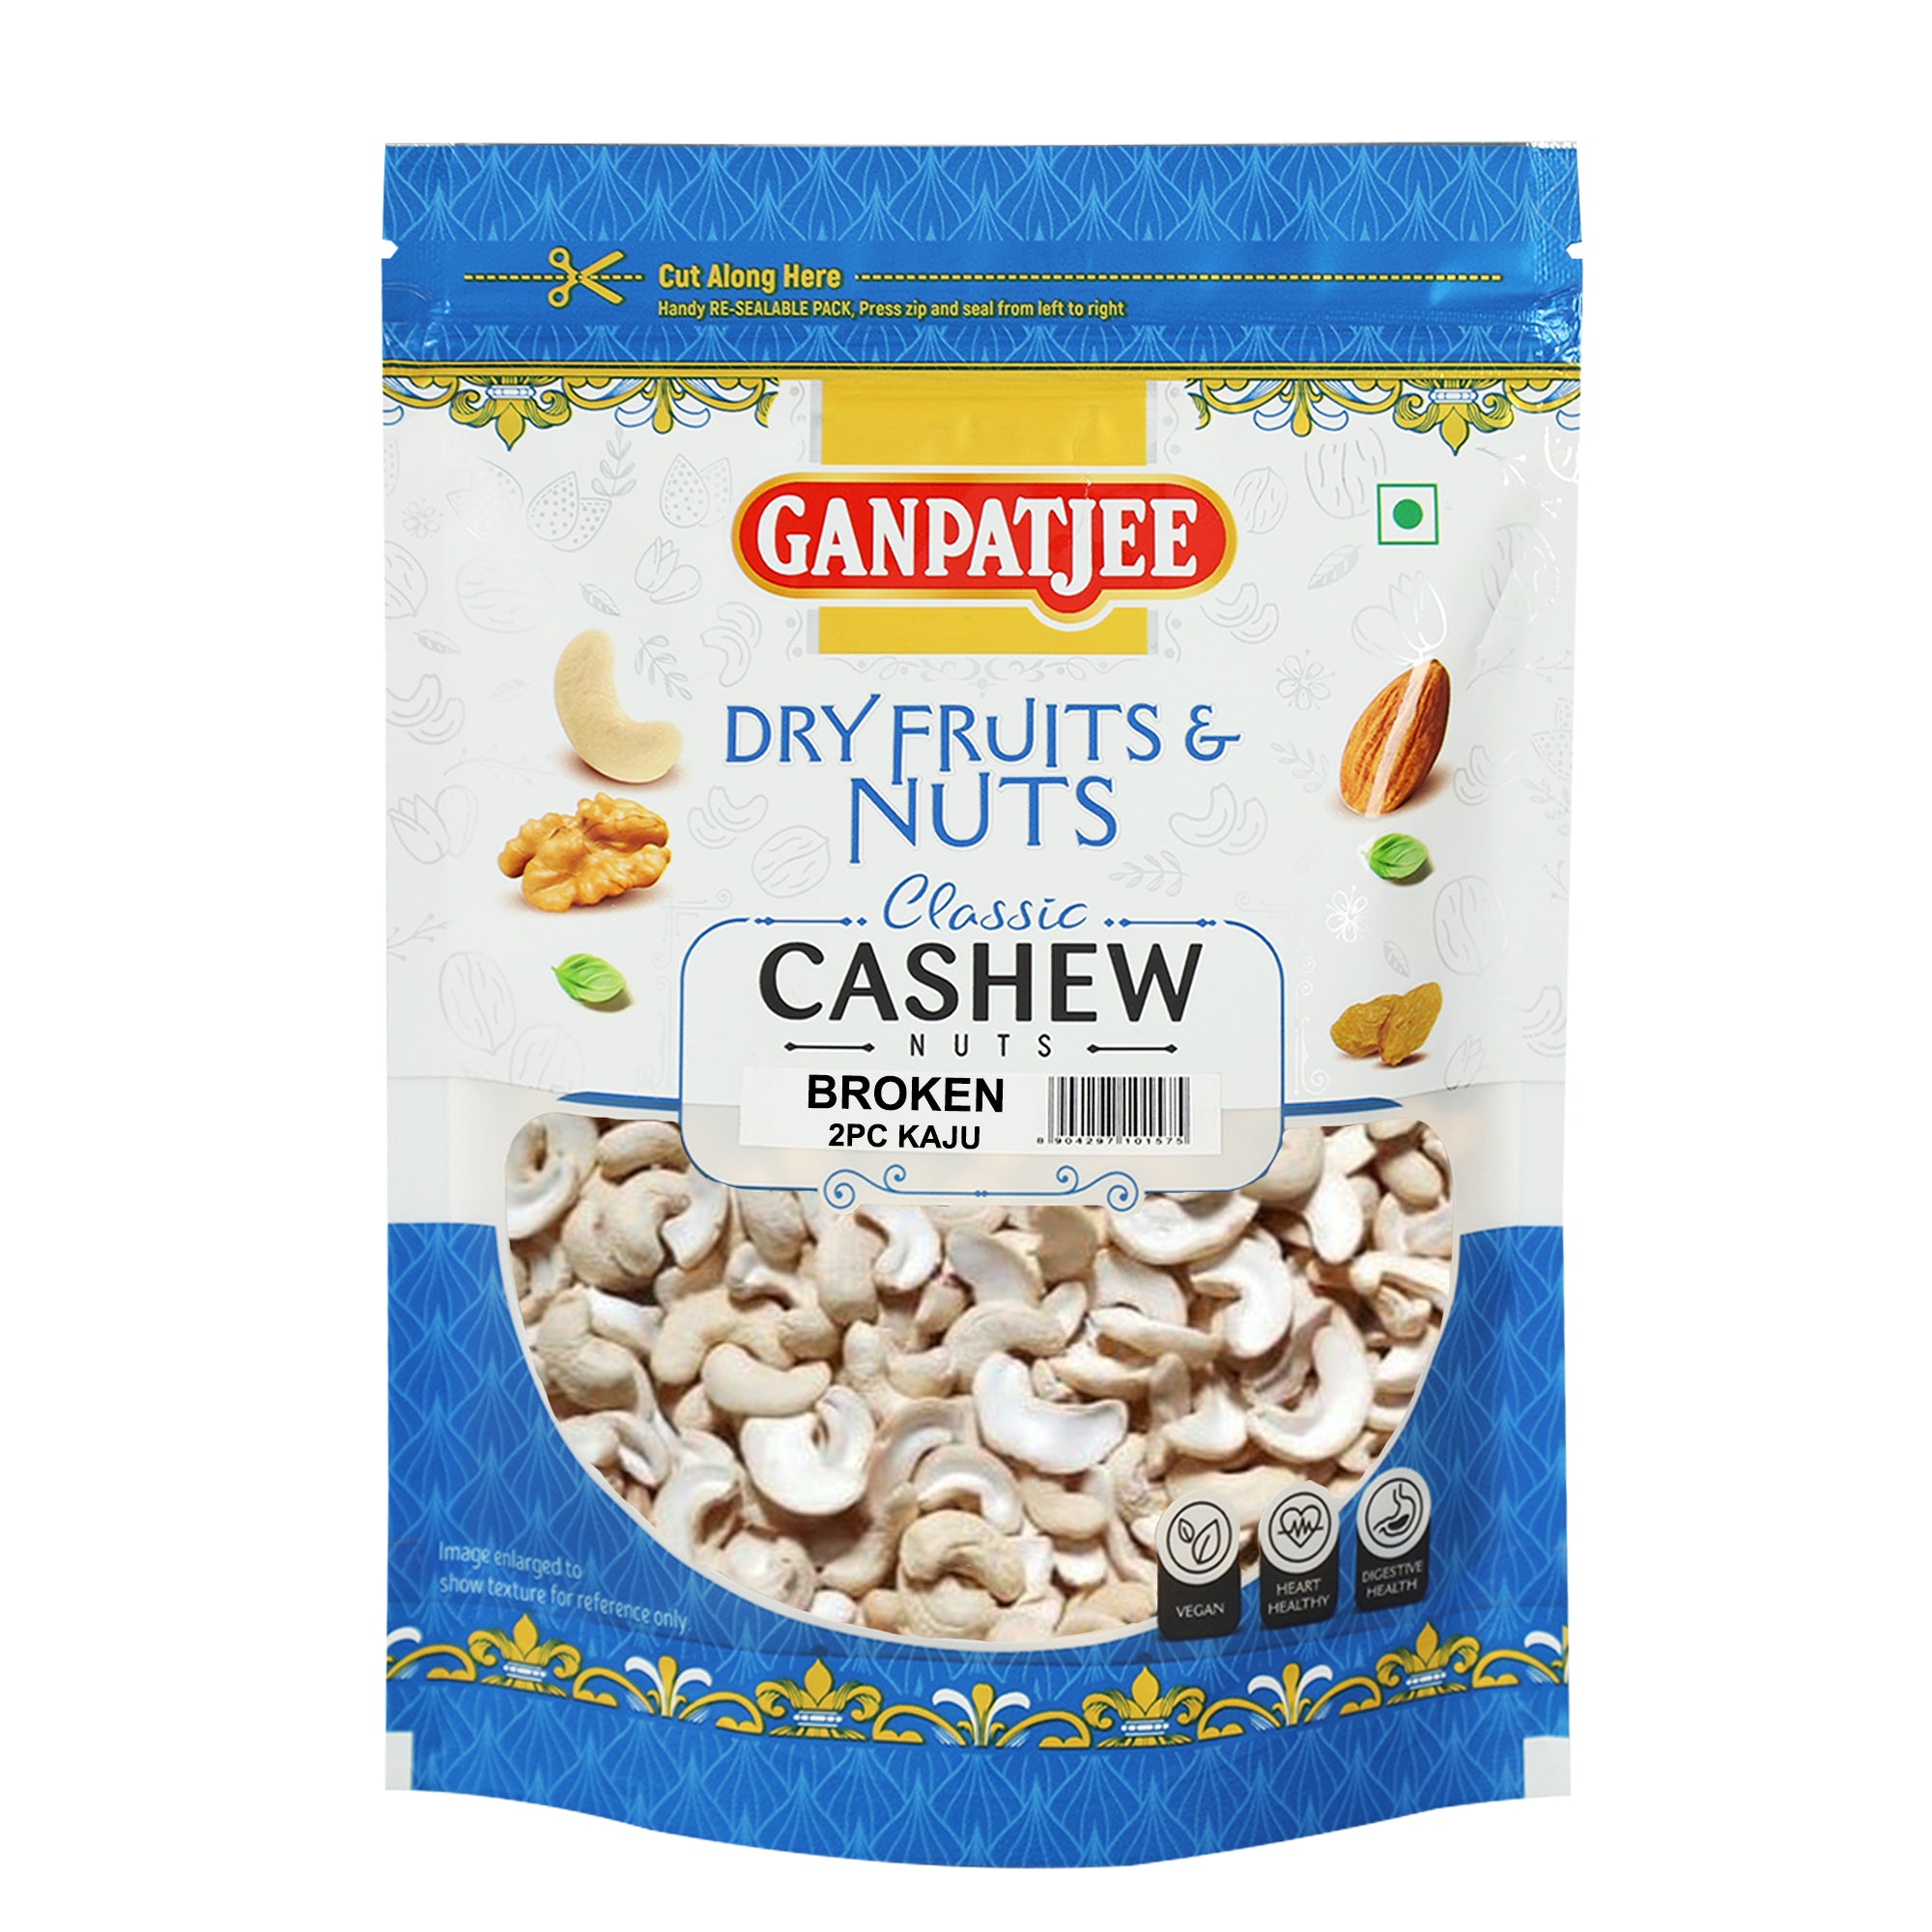 Ganpatjee Broken Cashew Kaju 2pc, 250g